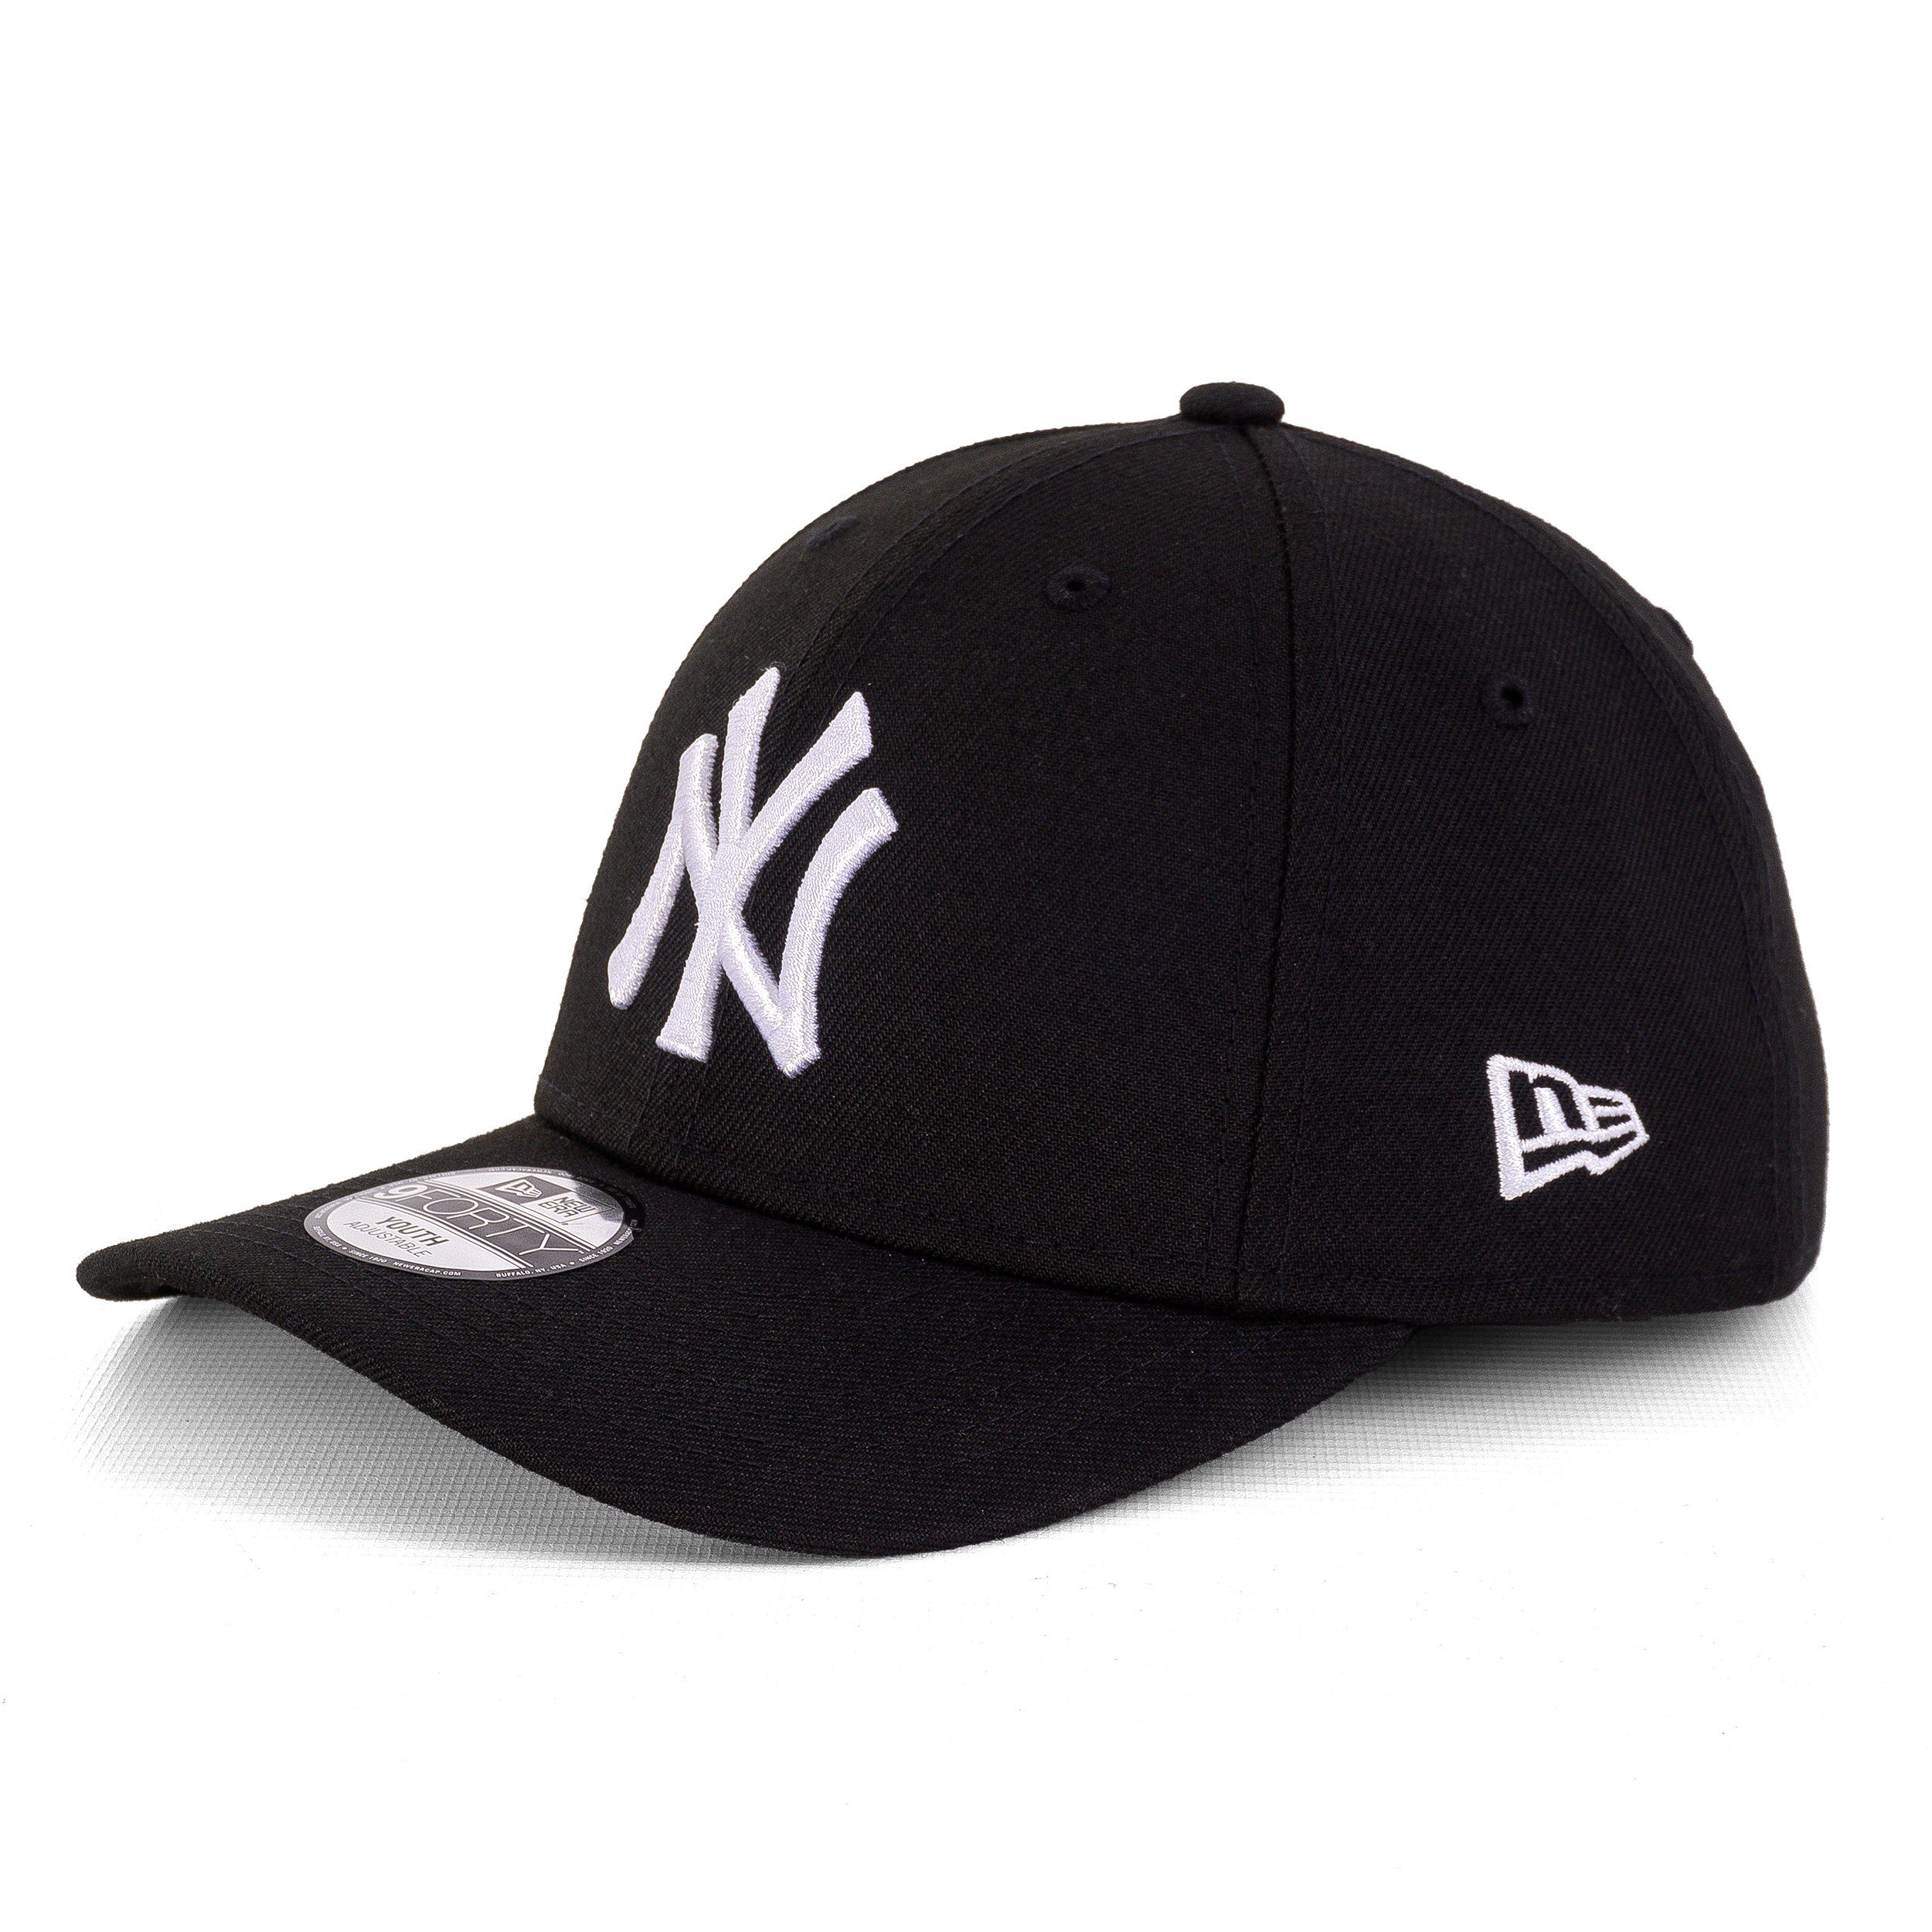 Cap Cap Era Era Yankees York Baseball KID9Forty New New New